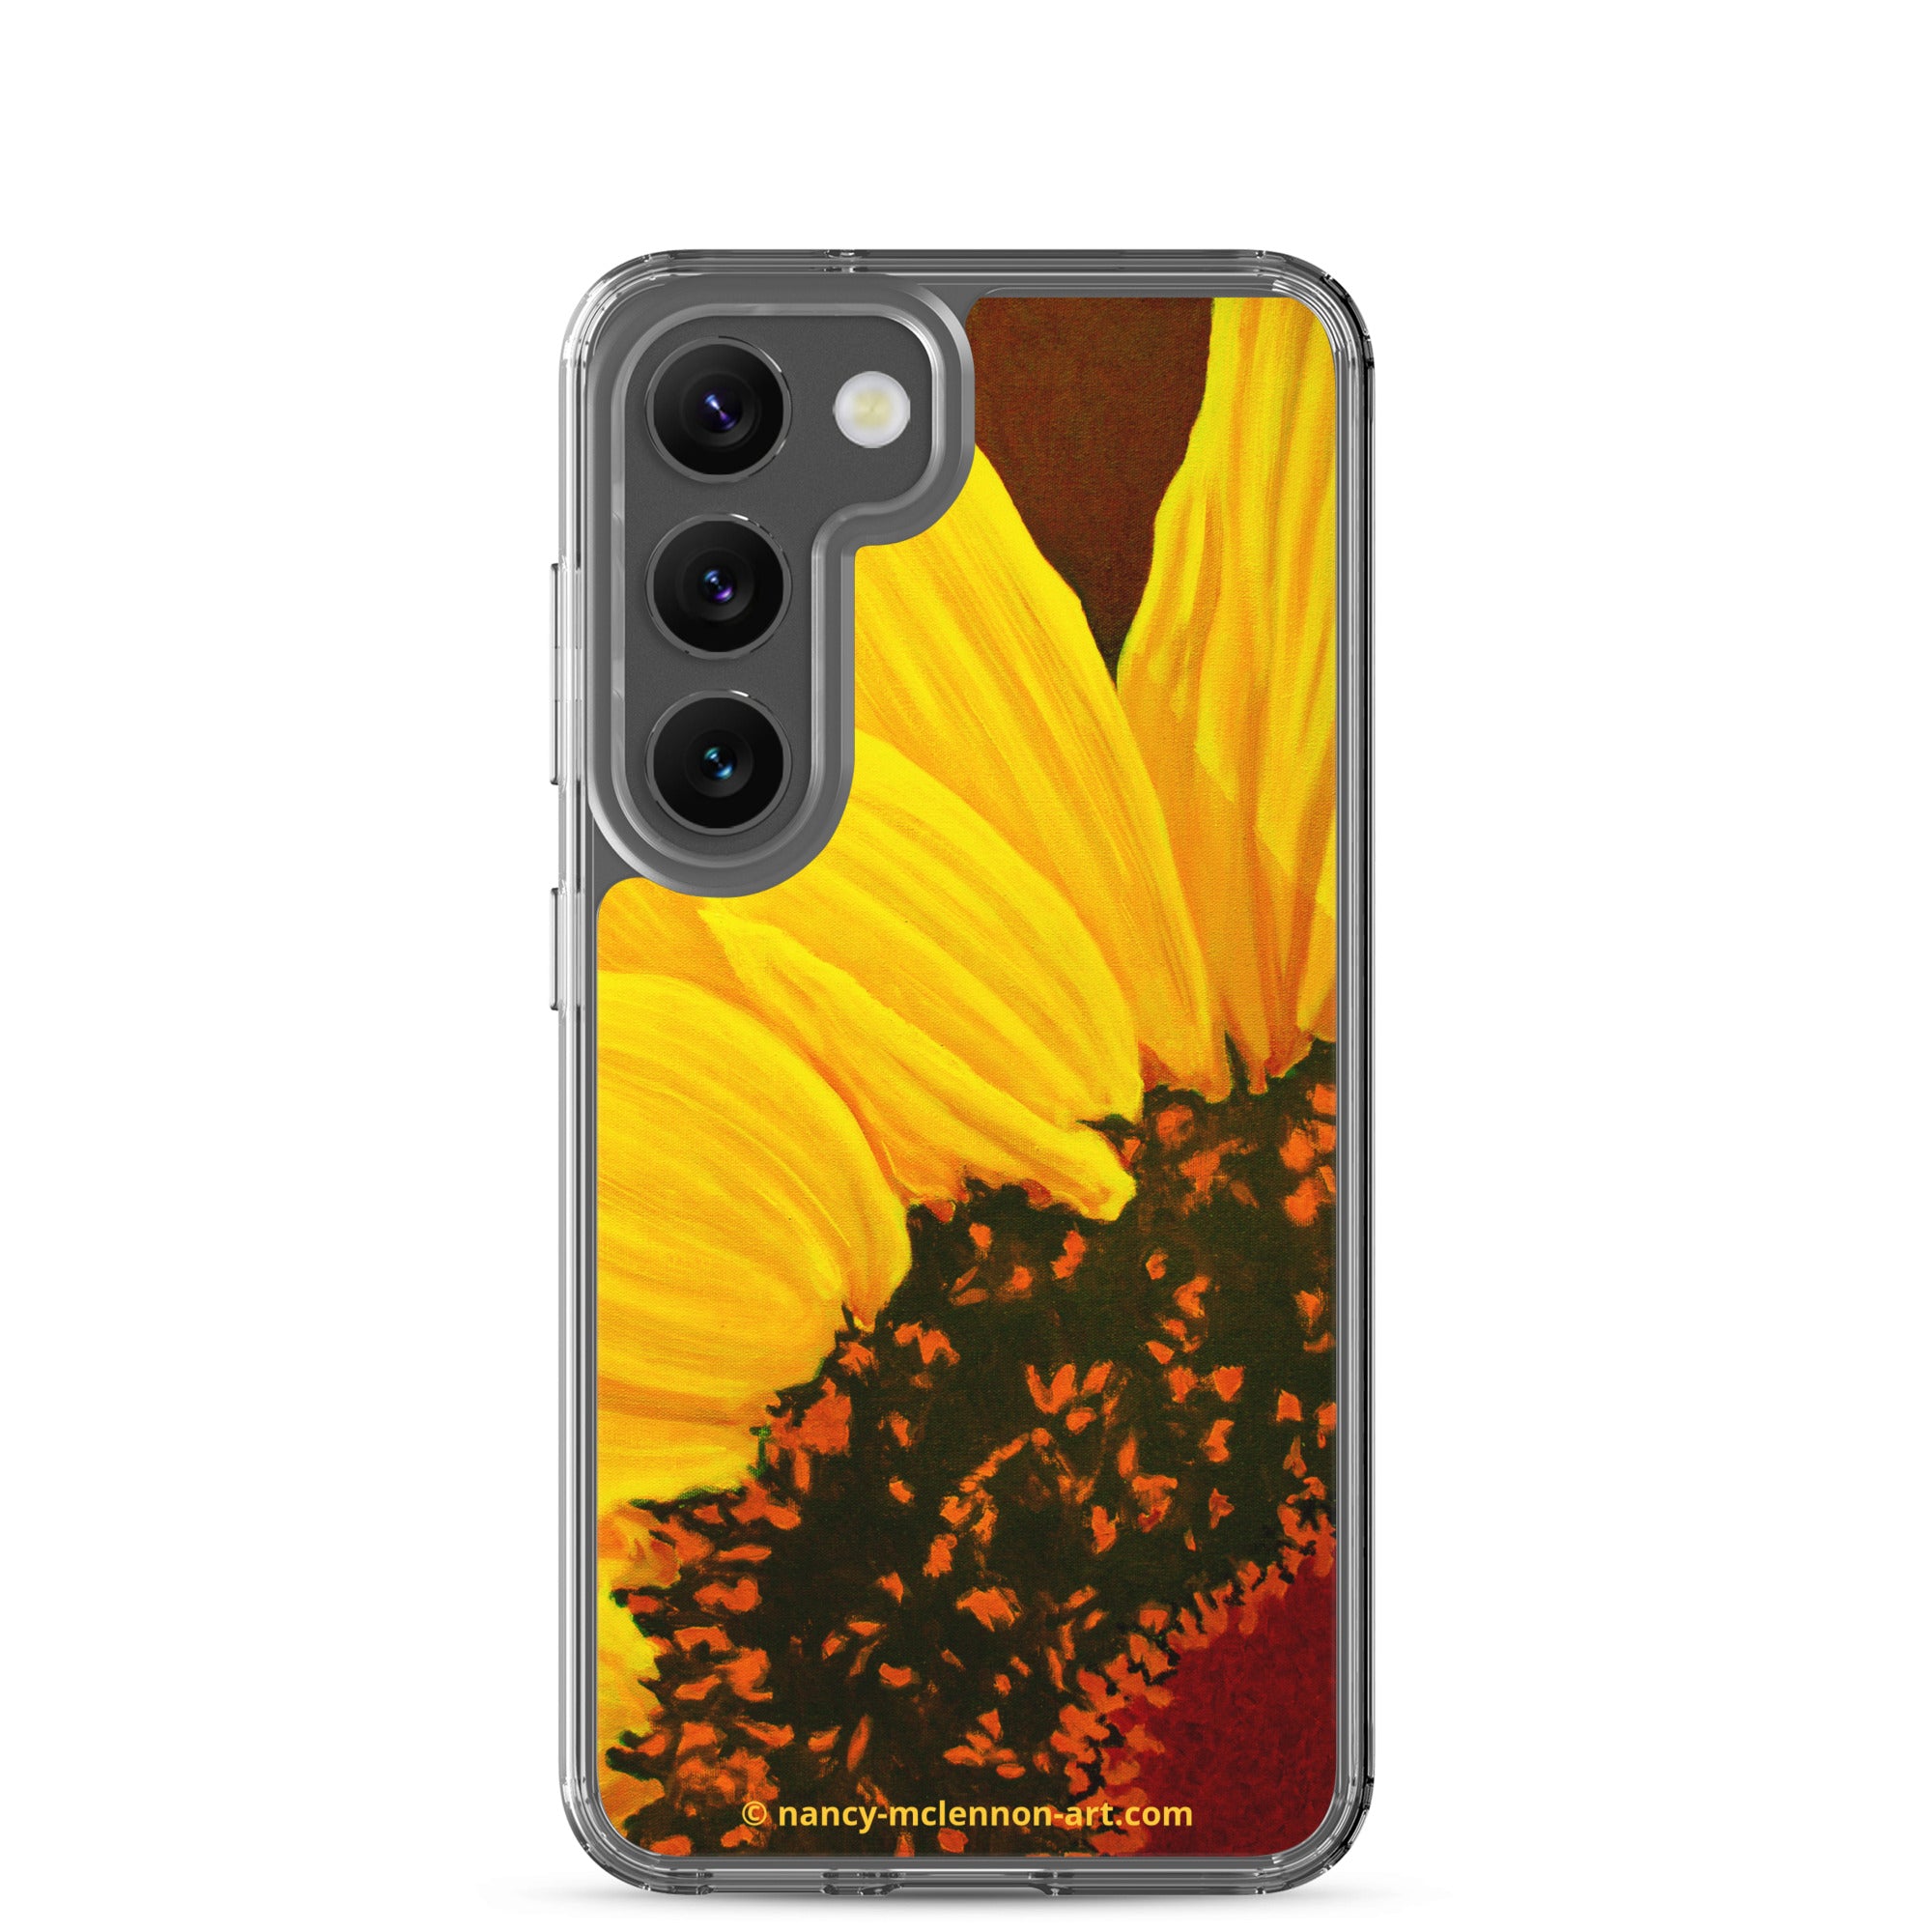 Samsung® Case - Sunflower on purple with red center